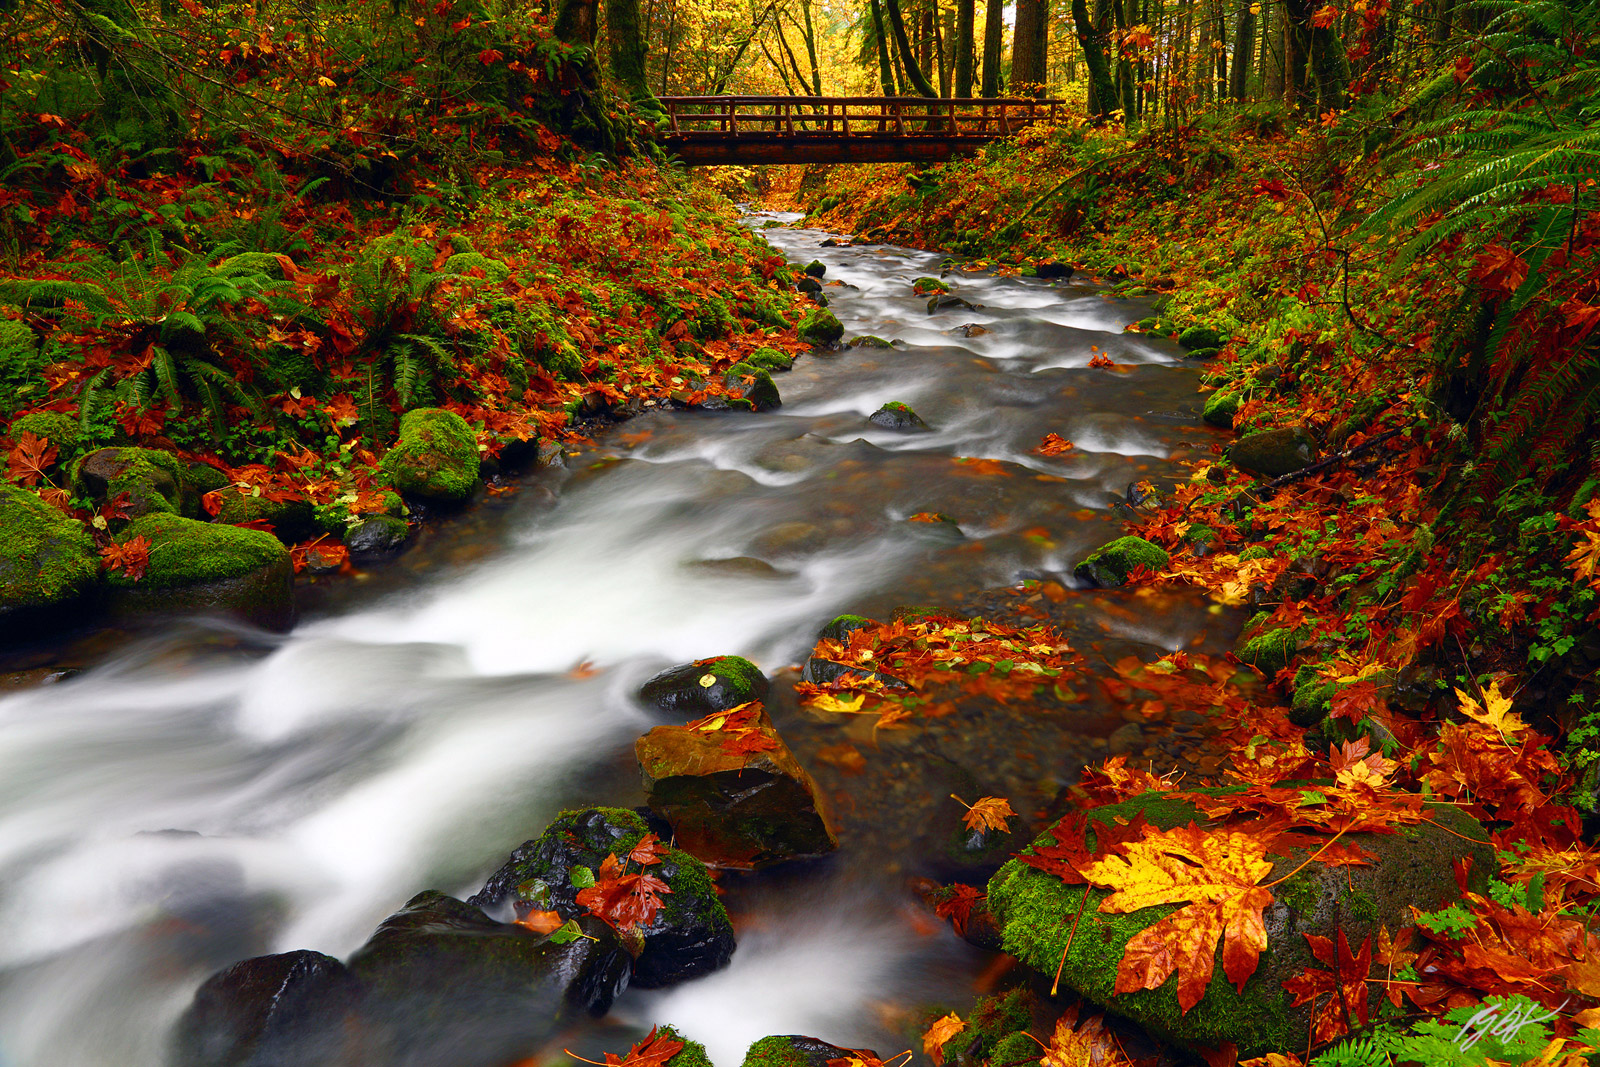 Gorton Creek in Fall in the Columbia River Gorge National Scenic Area in Oregon